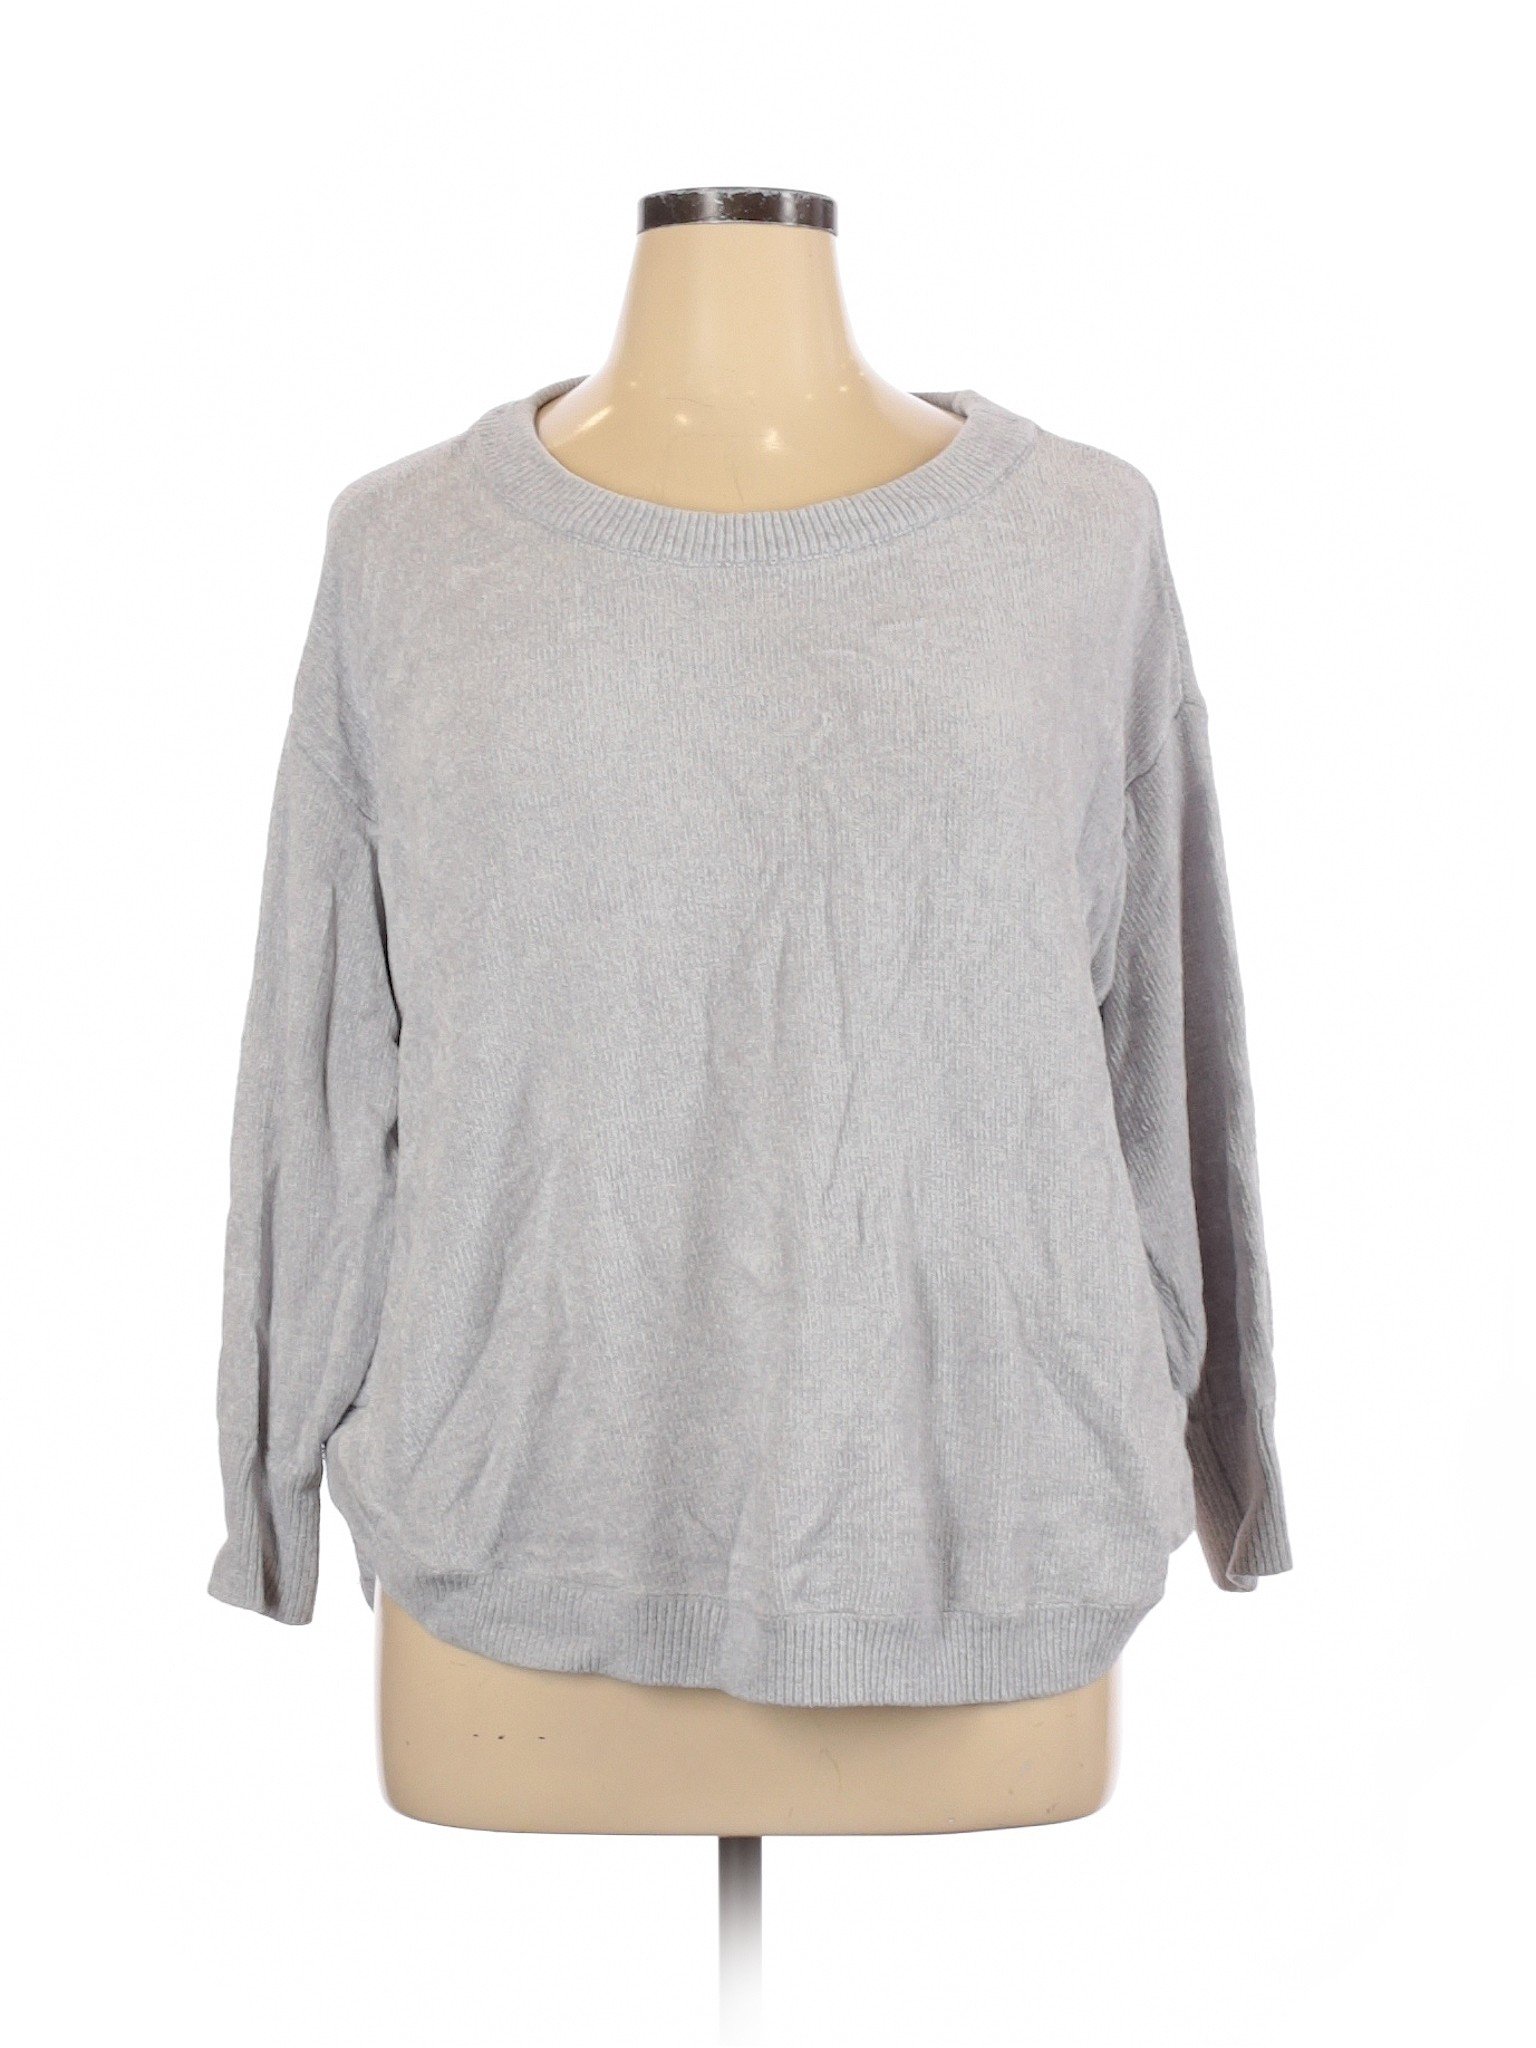 Lou & Grey Women Gray Pullover Sweater XL | eBay